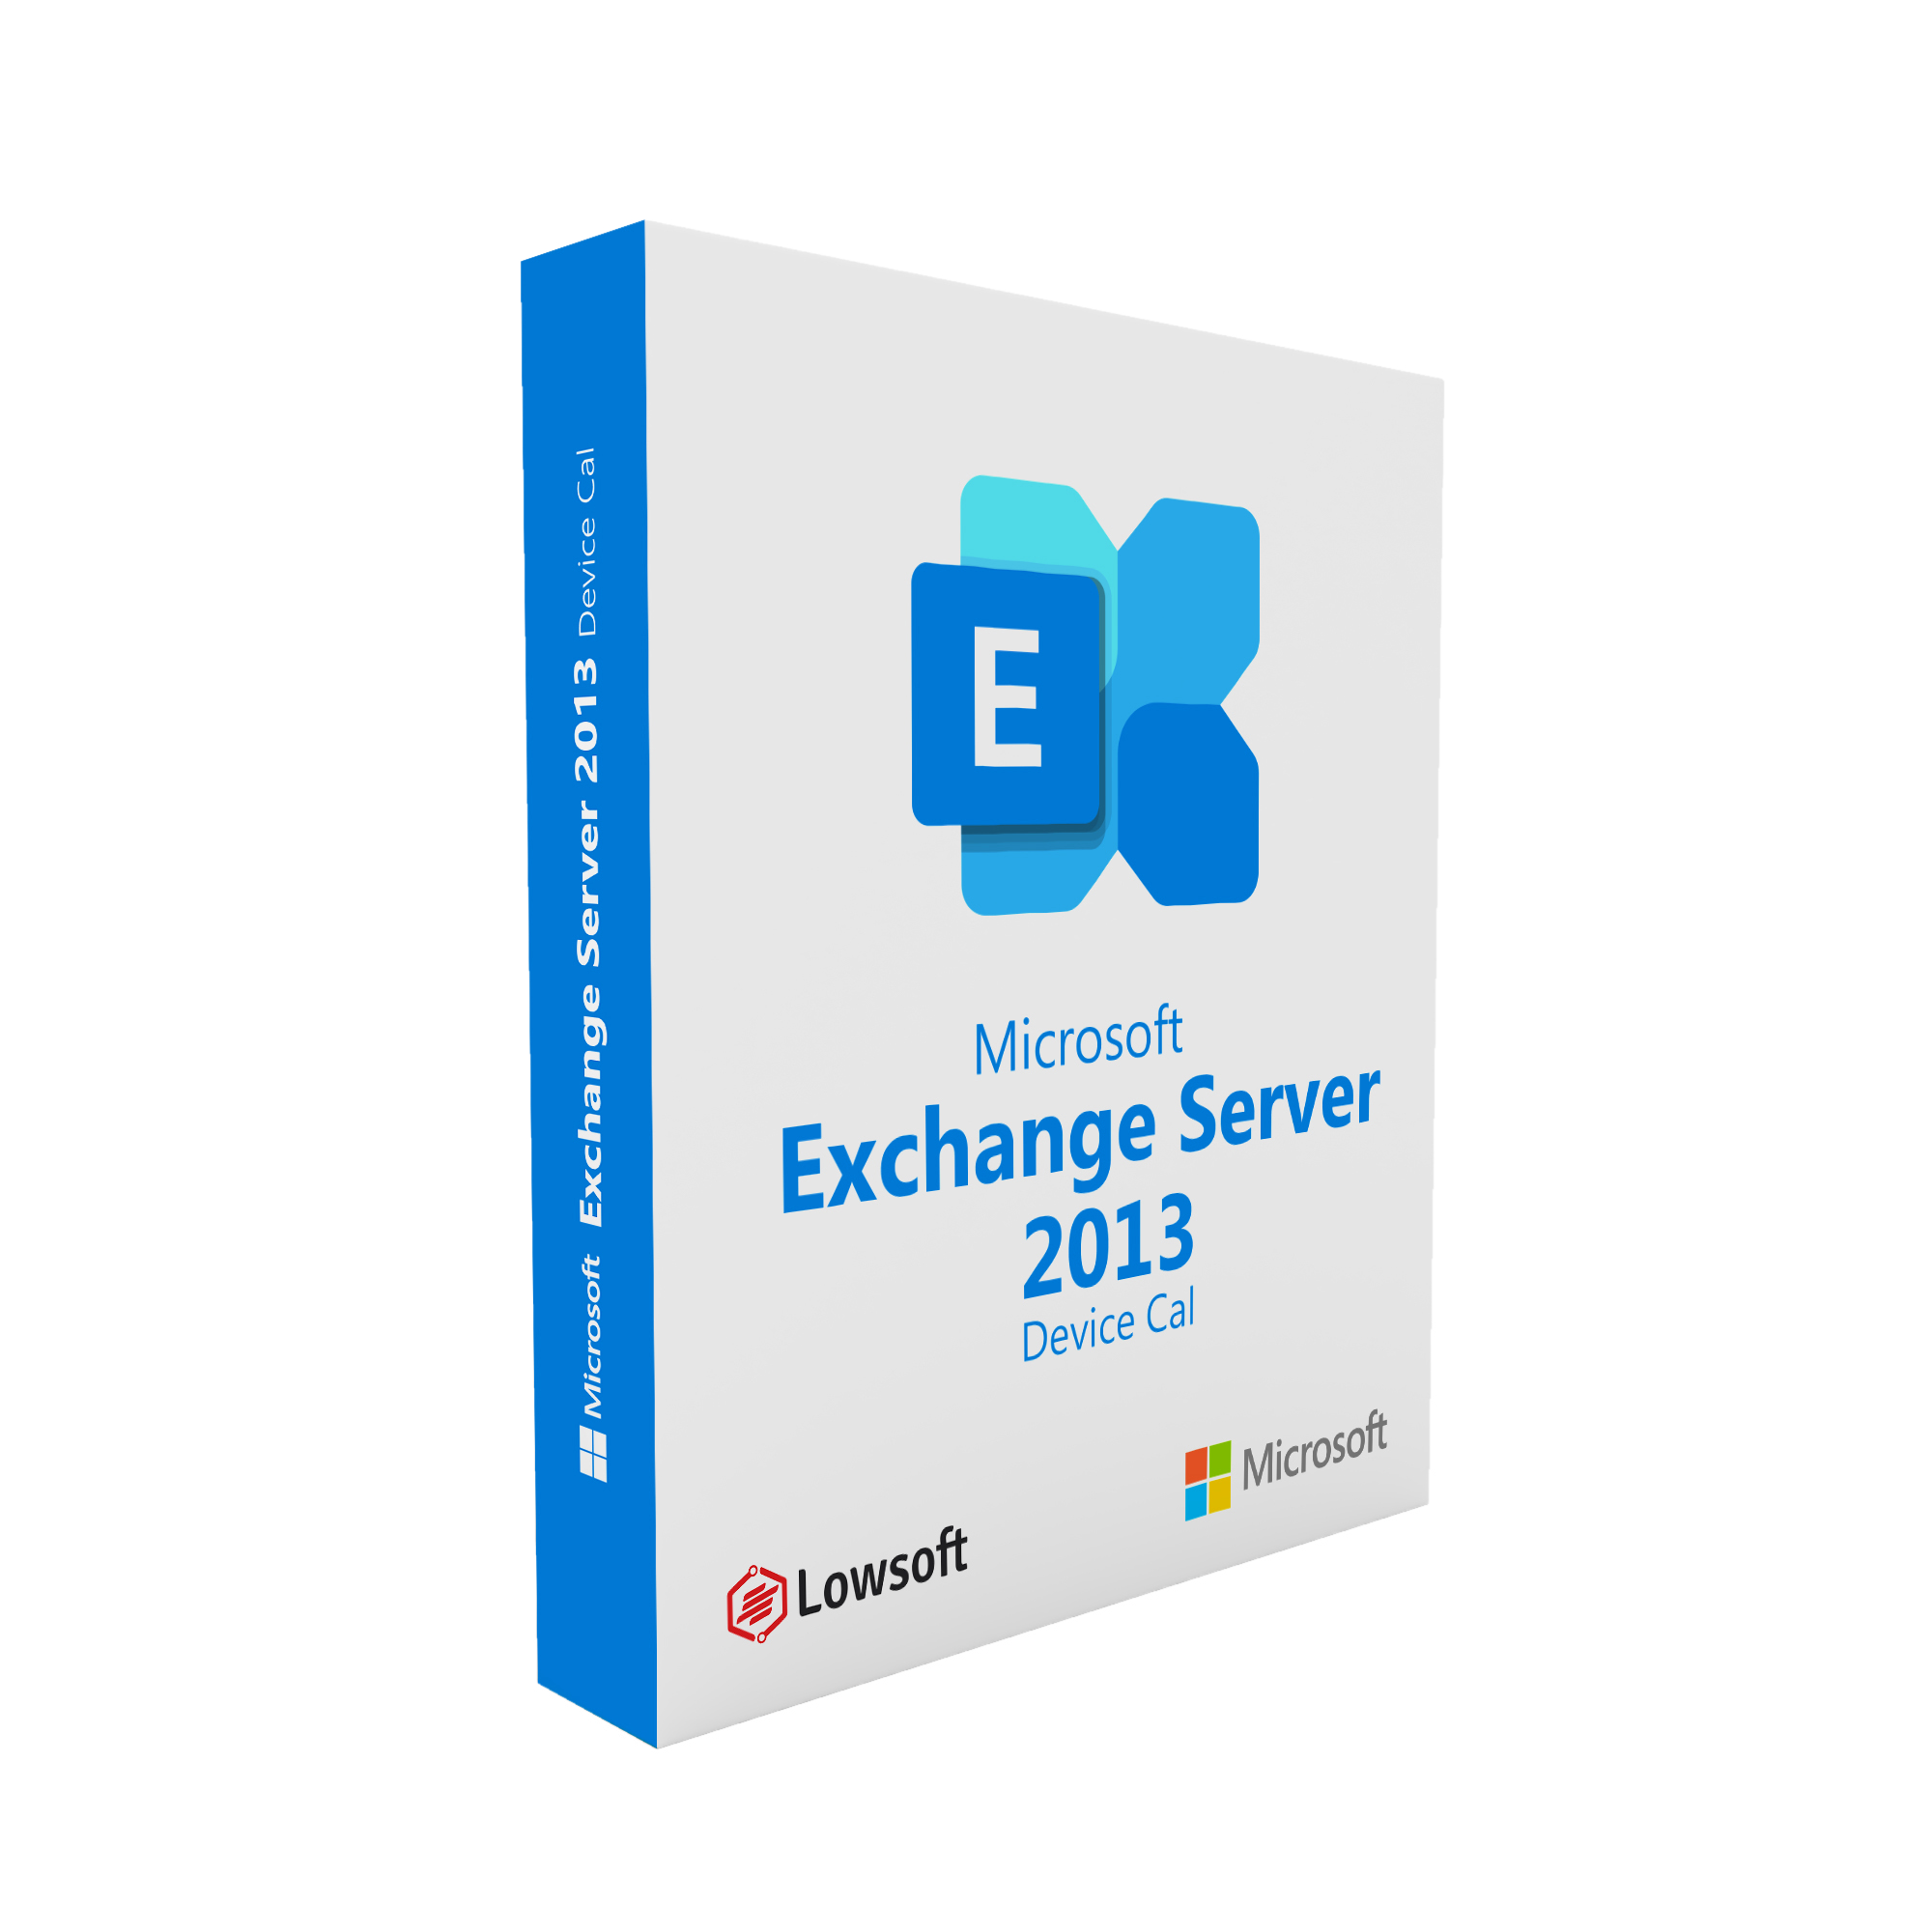 Exchange Server 2013 Device CAL